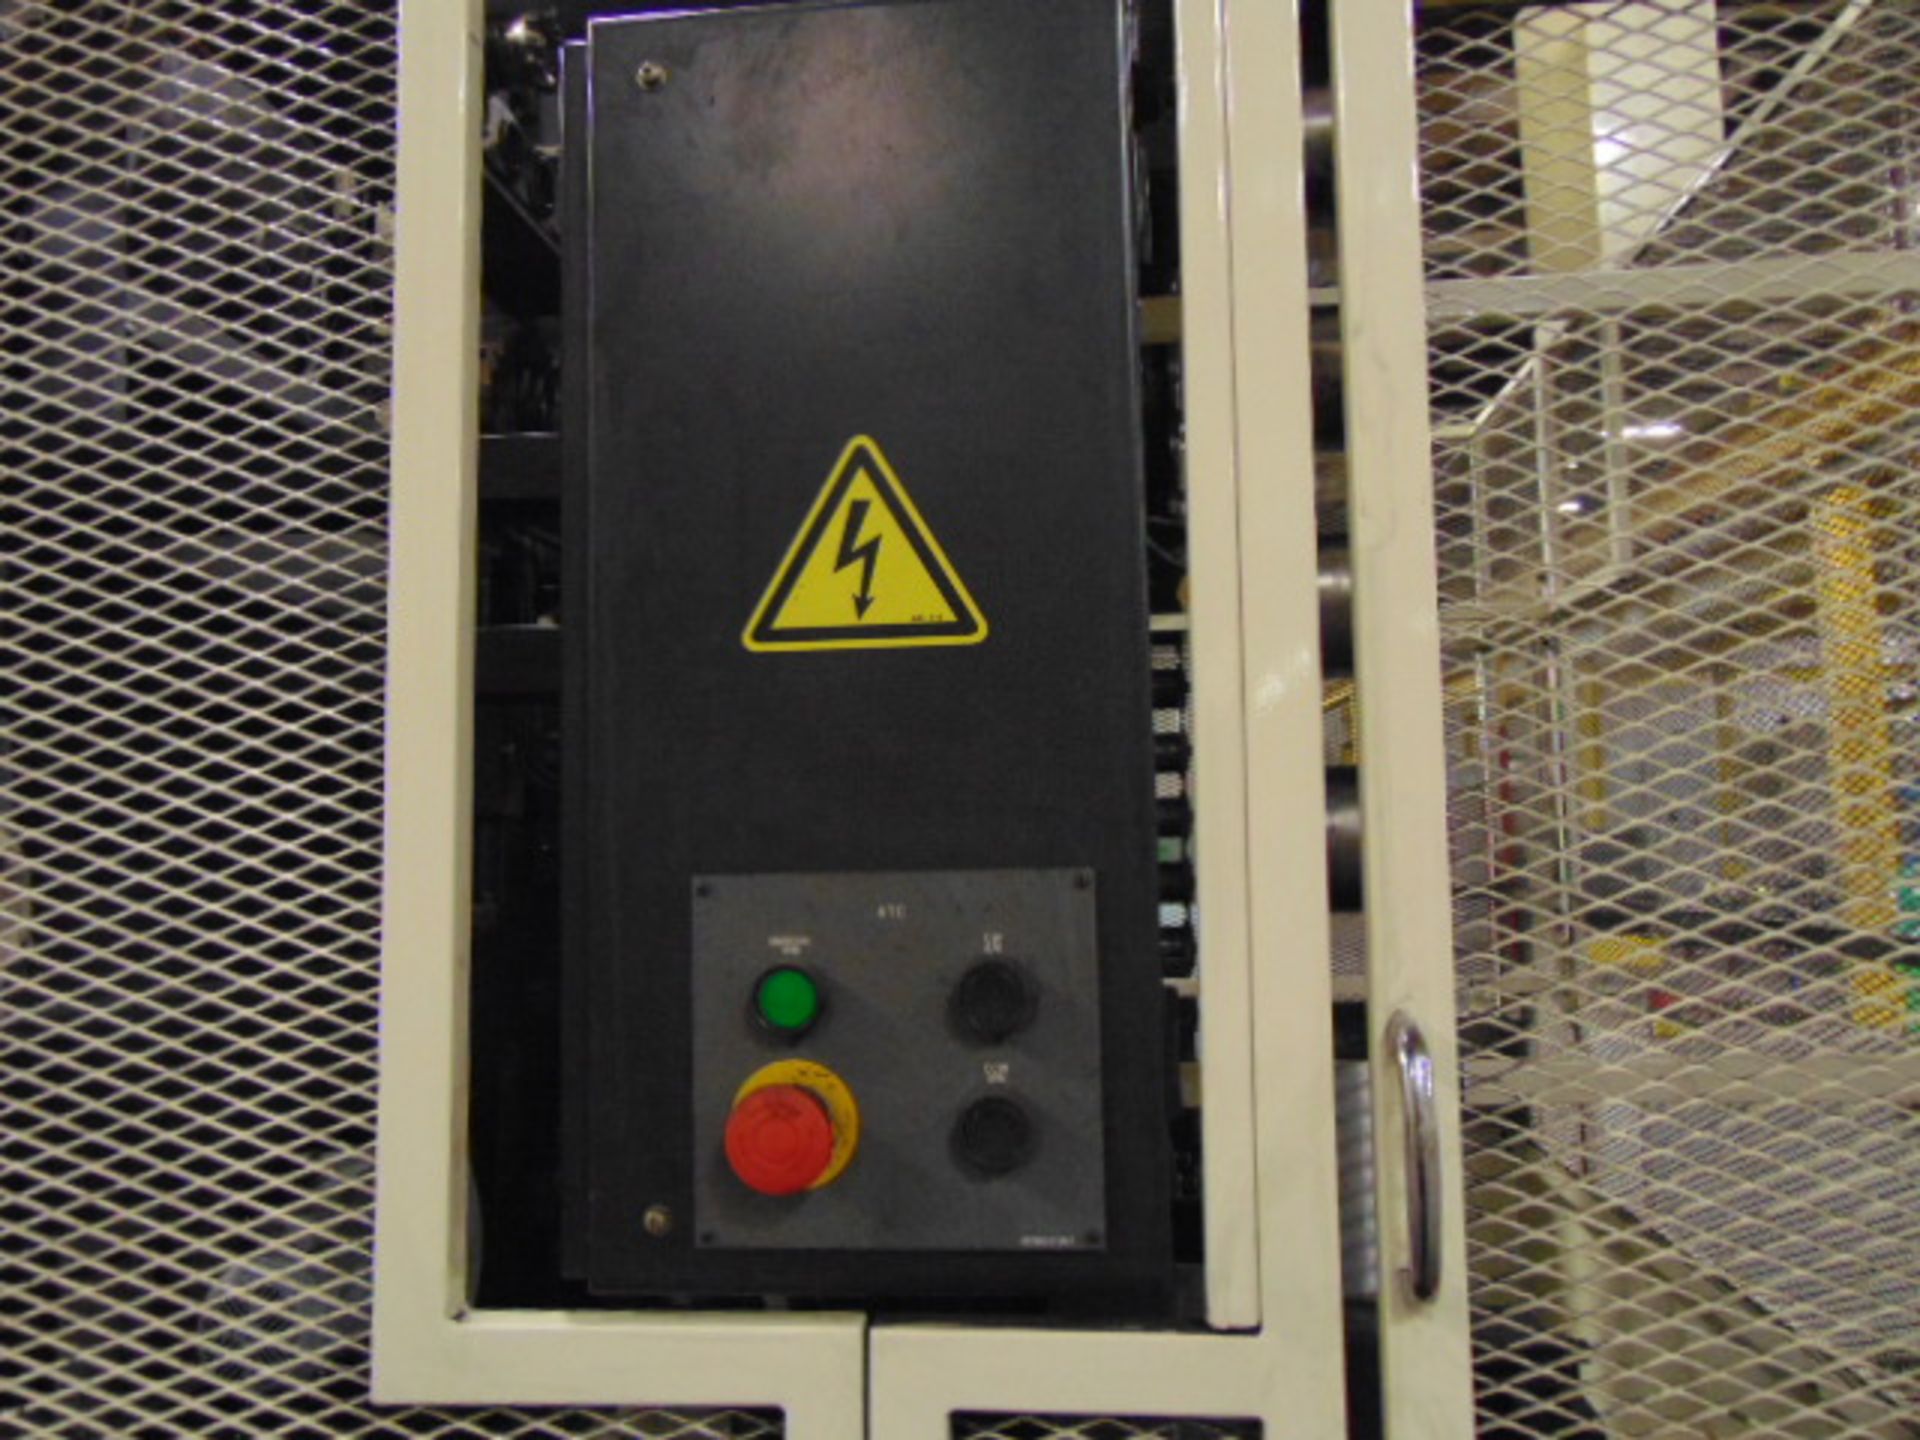 4-AXIS HORIZONTAL MACHINING CENTER, NIIGATA MDL. HN80D, new 2007, Fanuc 16i-MB CNC control, 31.5” - Image 18 of 30